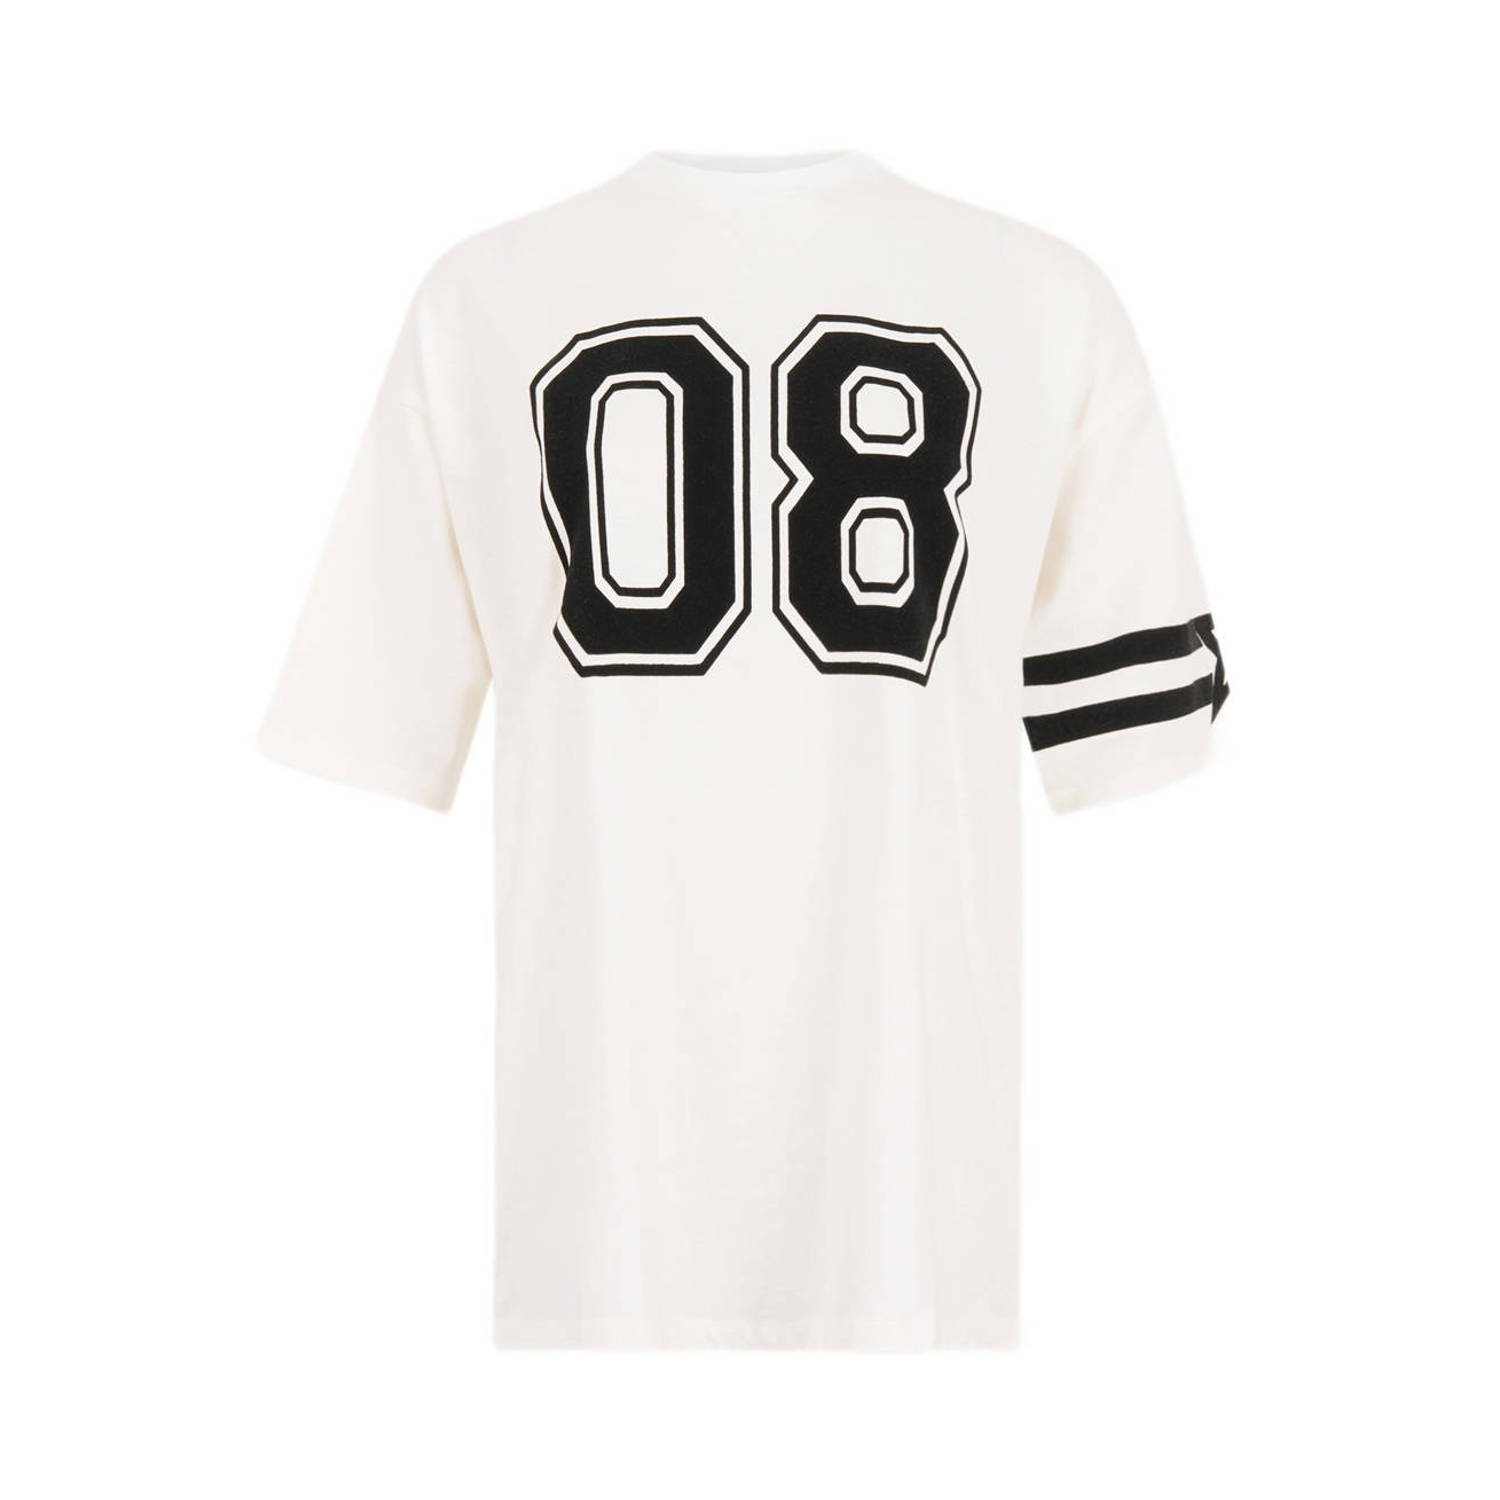 Shoeby T-shirt met printopdruk wit zwart